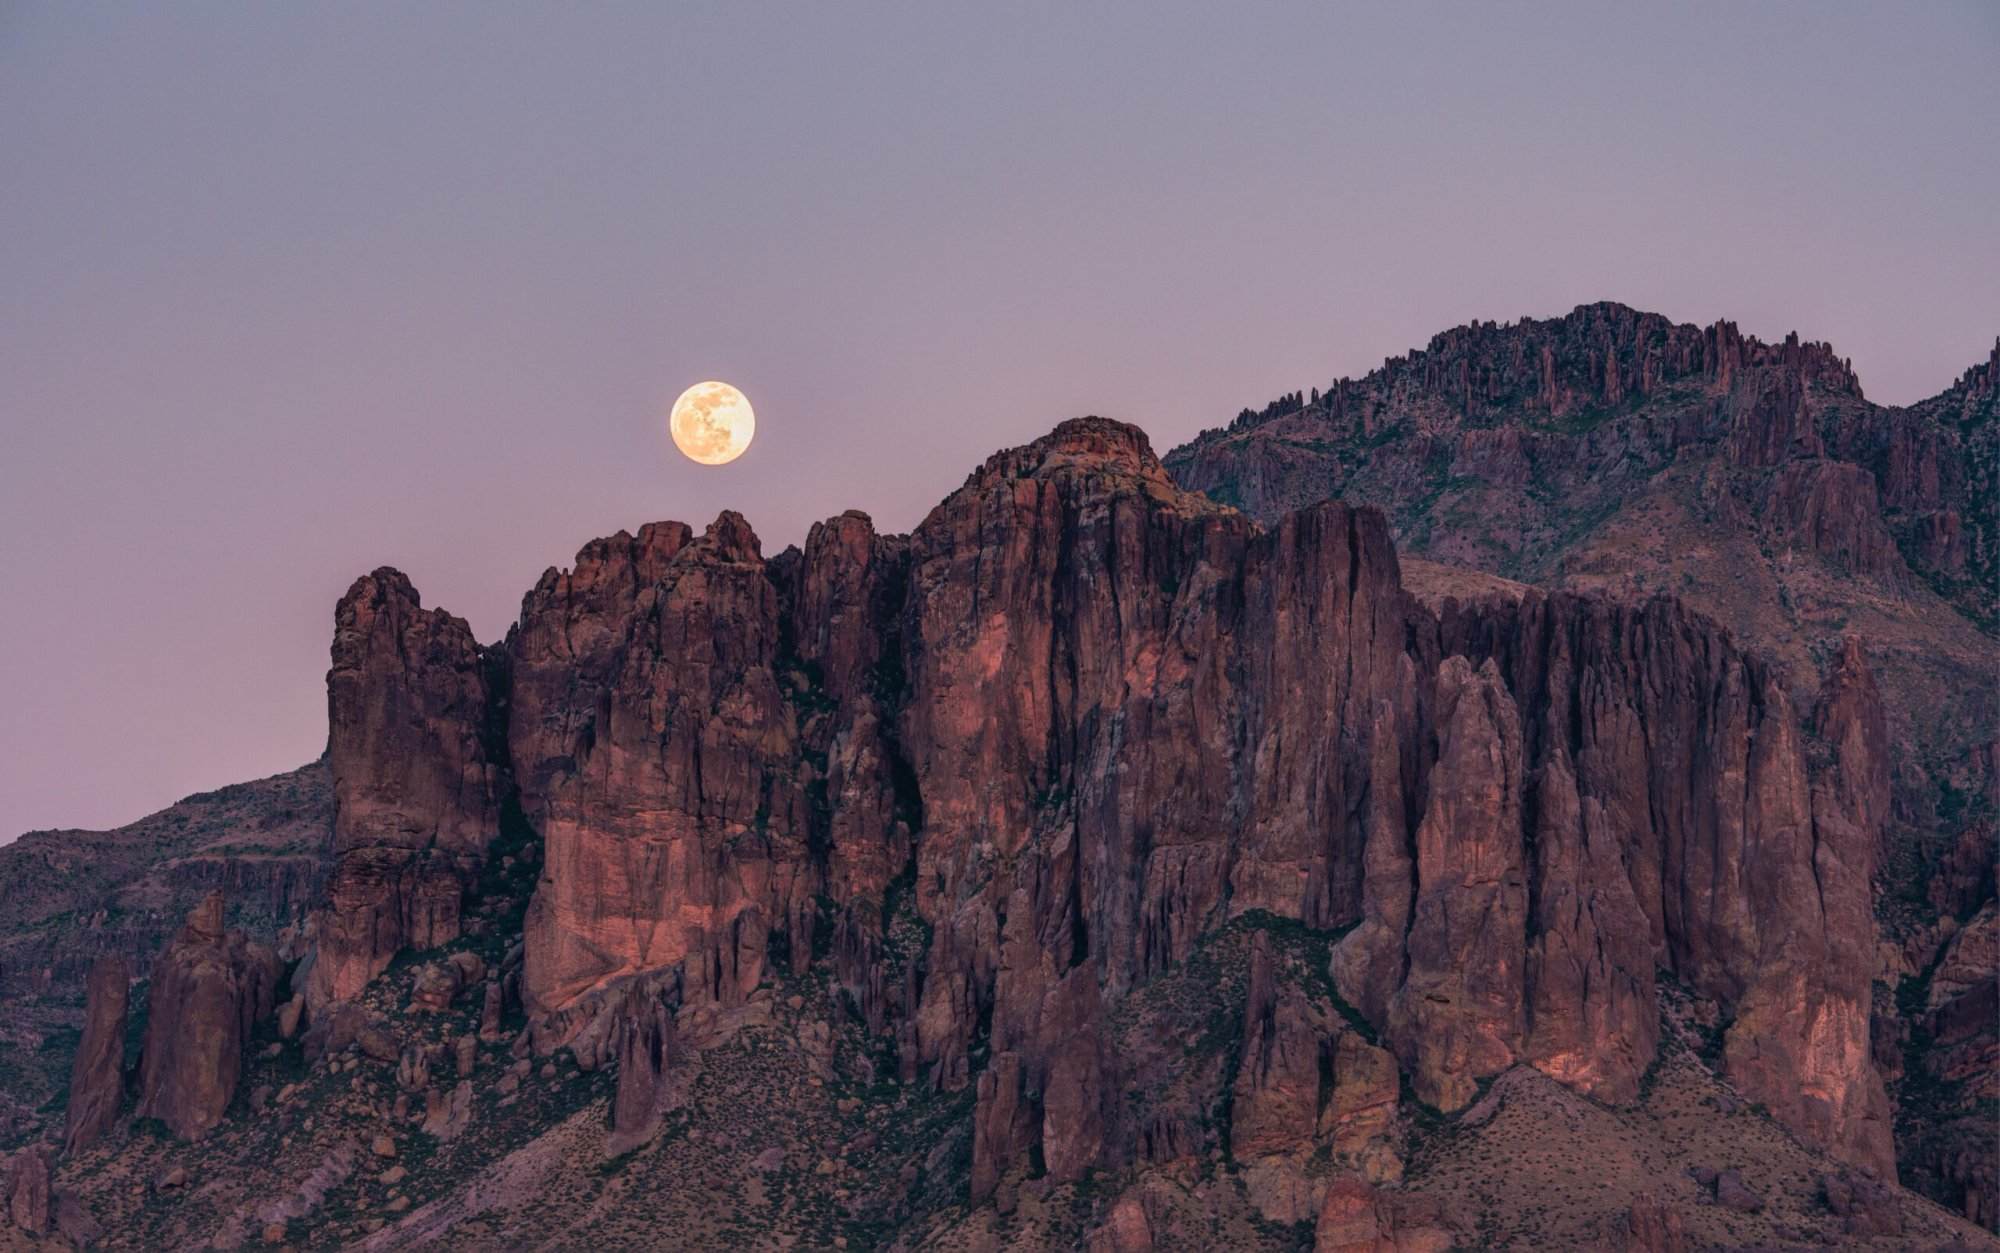 A full moon rises over a mountain range.